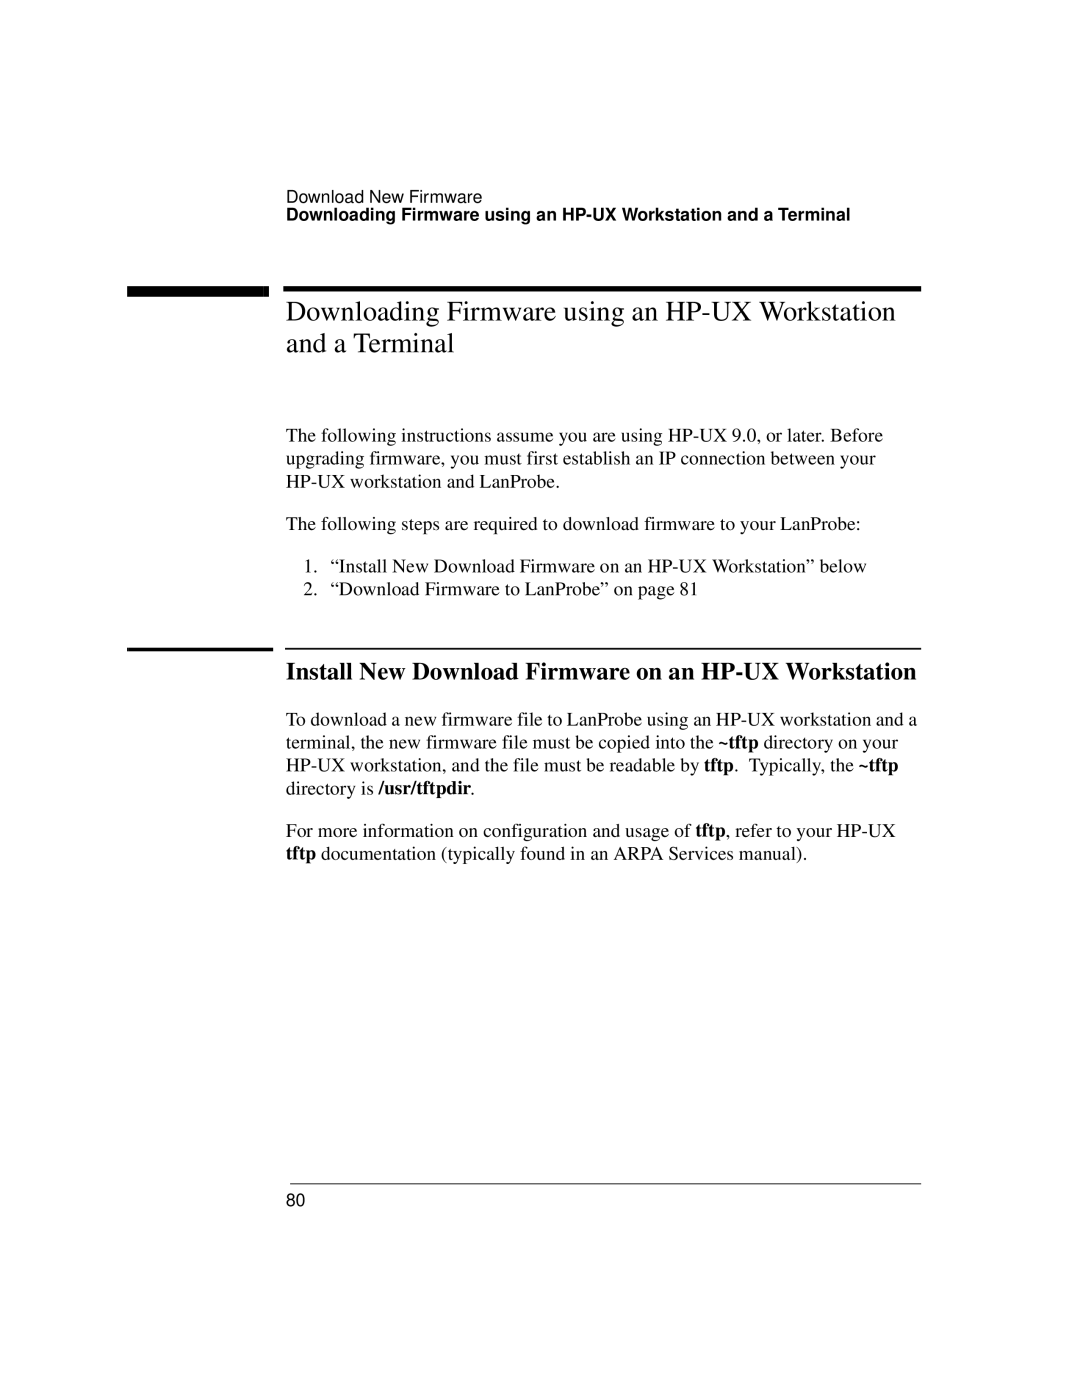 IBM 4986B LanProbe manual Downloading Firmware using an HP-UX Workstation and a Terminal 